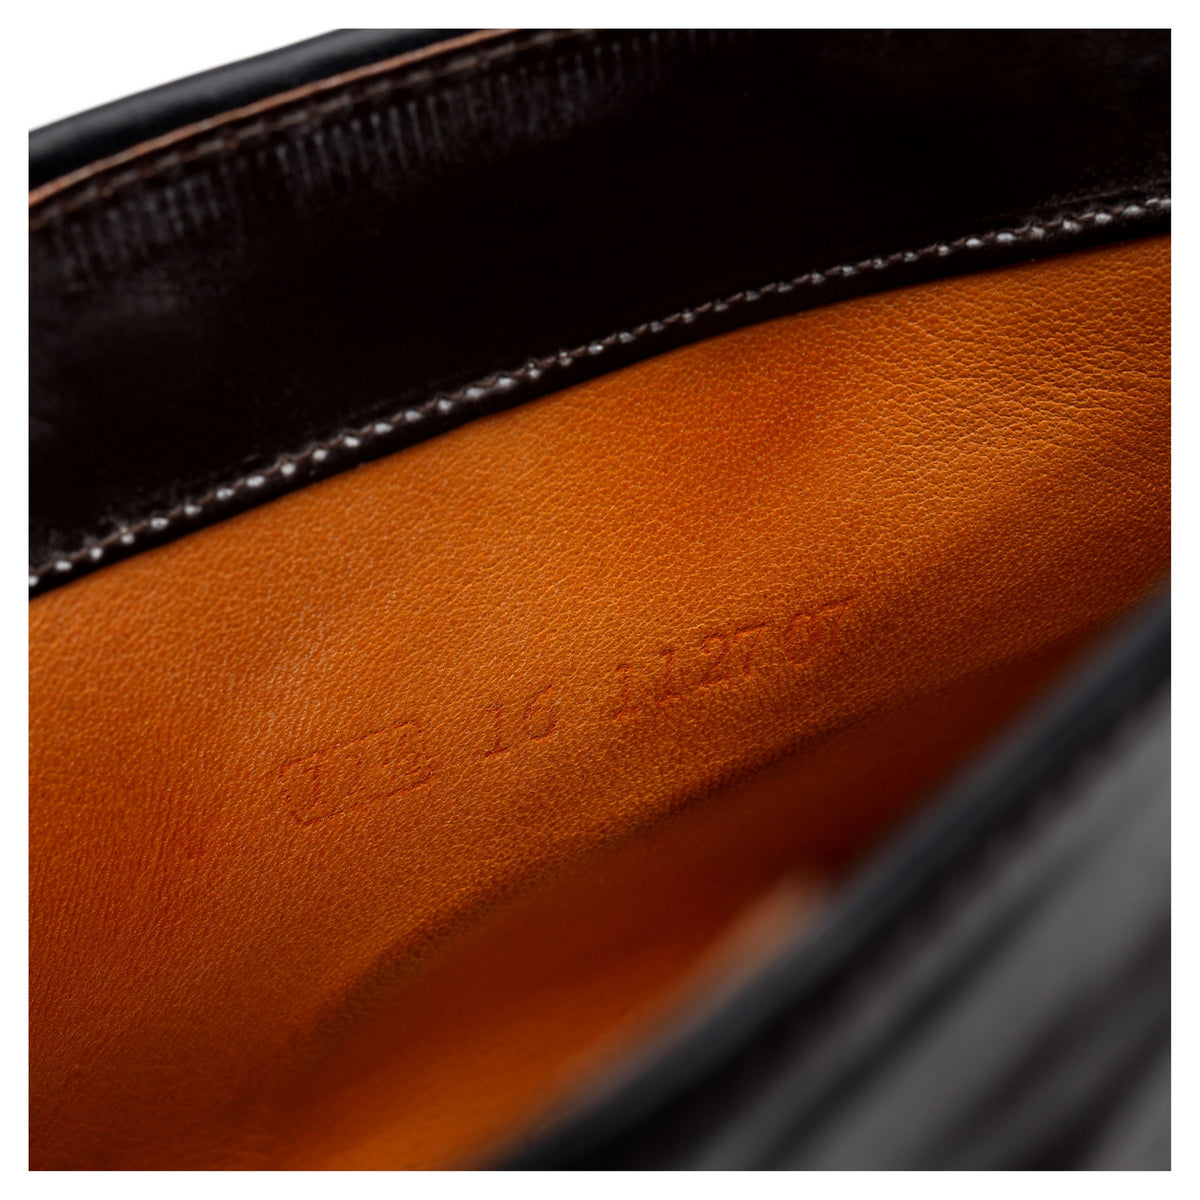 Burgundy Cordovan Leather Chukka Boots UK 11.5